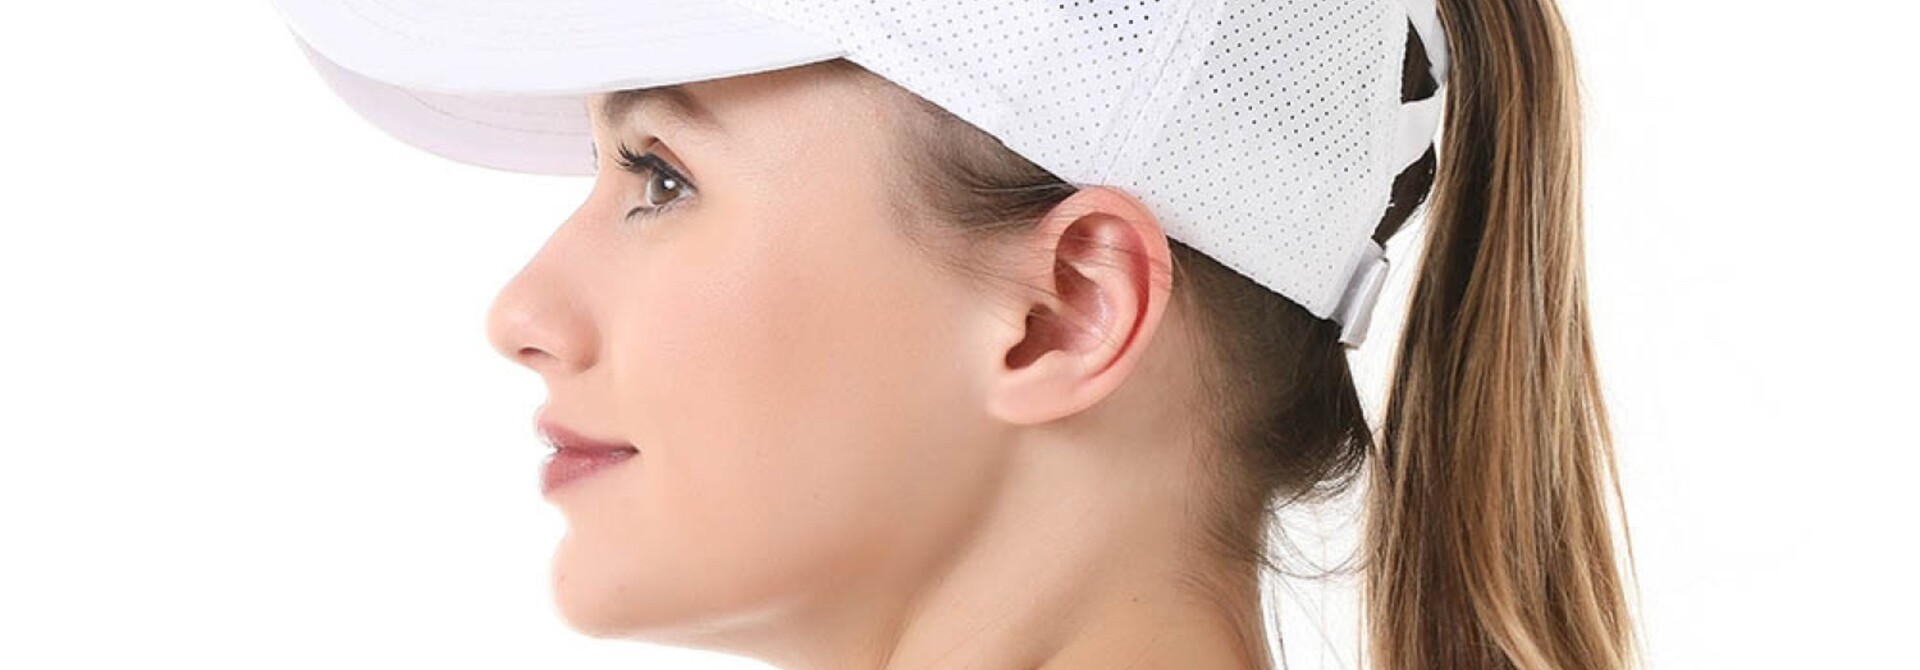 Baseball Cap - Adjustable Fit Cap - Trucker Hat – Sun Hat Womens - Head Circumference (20"-24") 51-61 CM - White